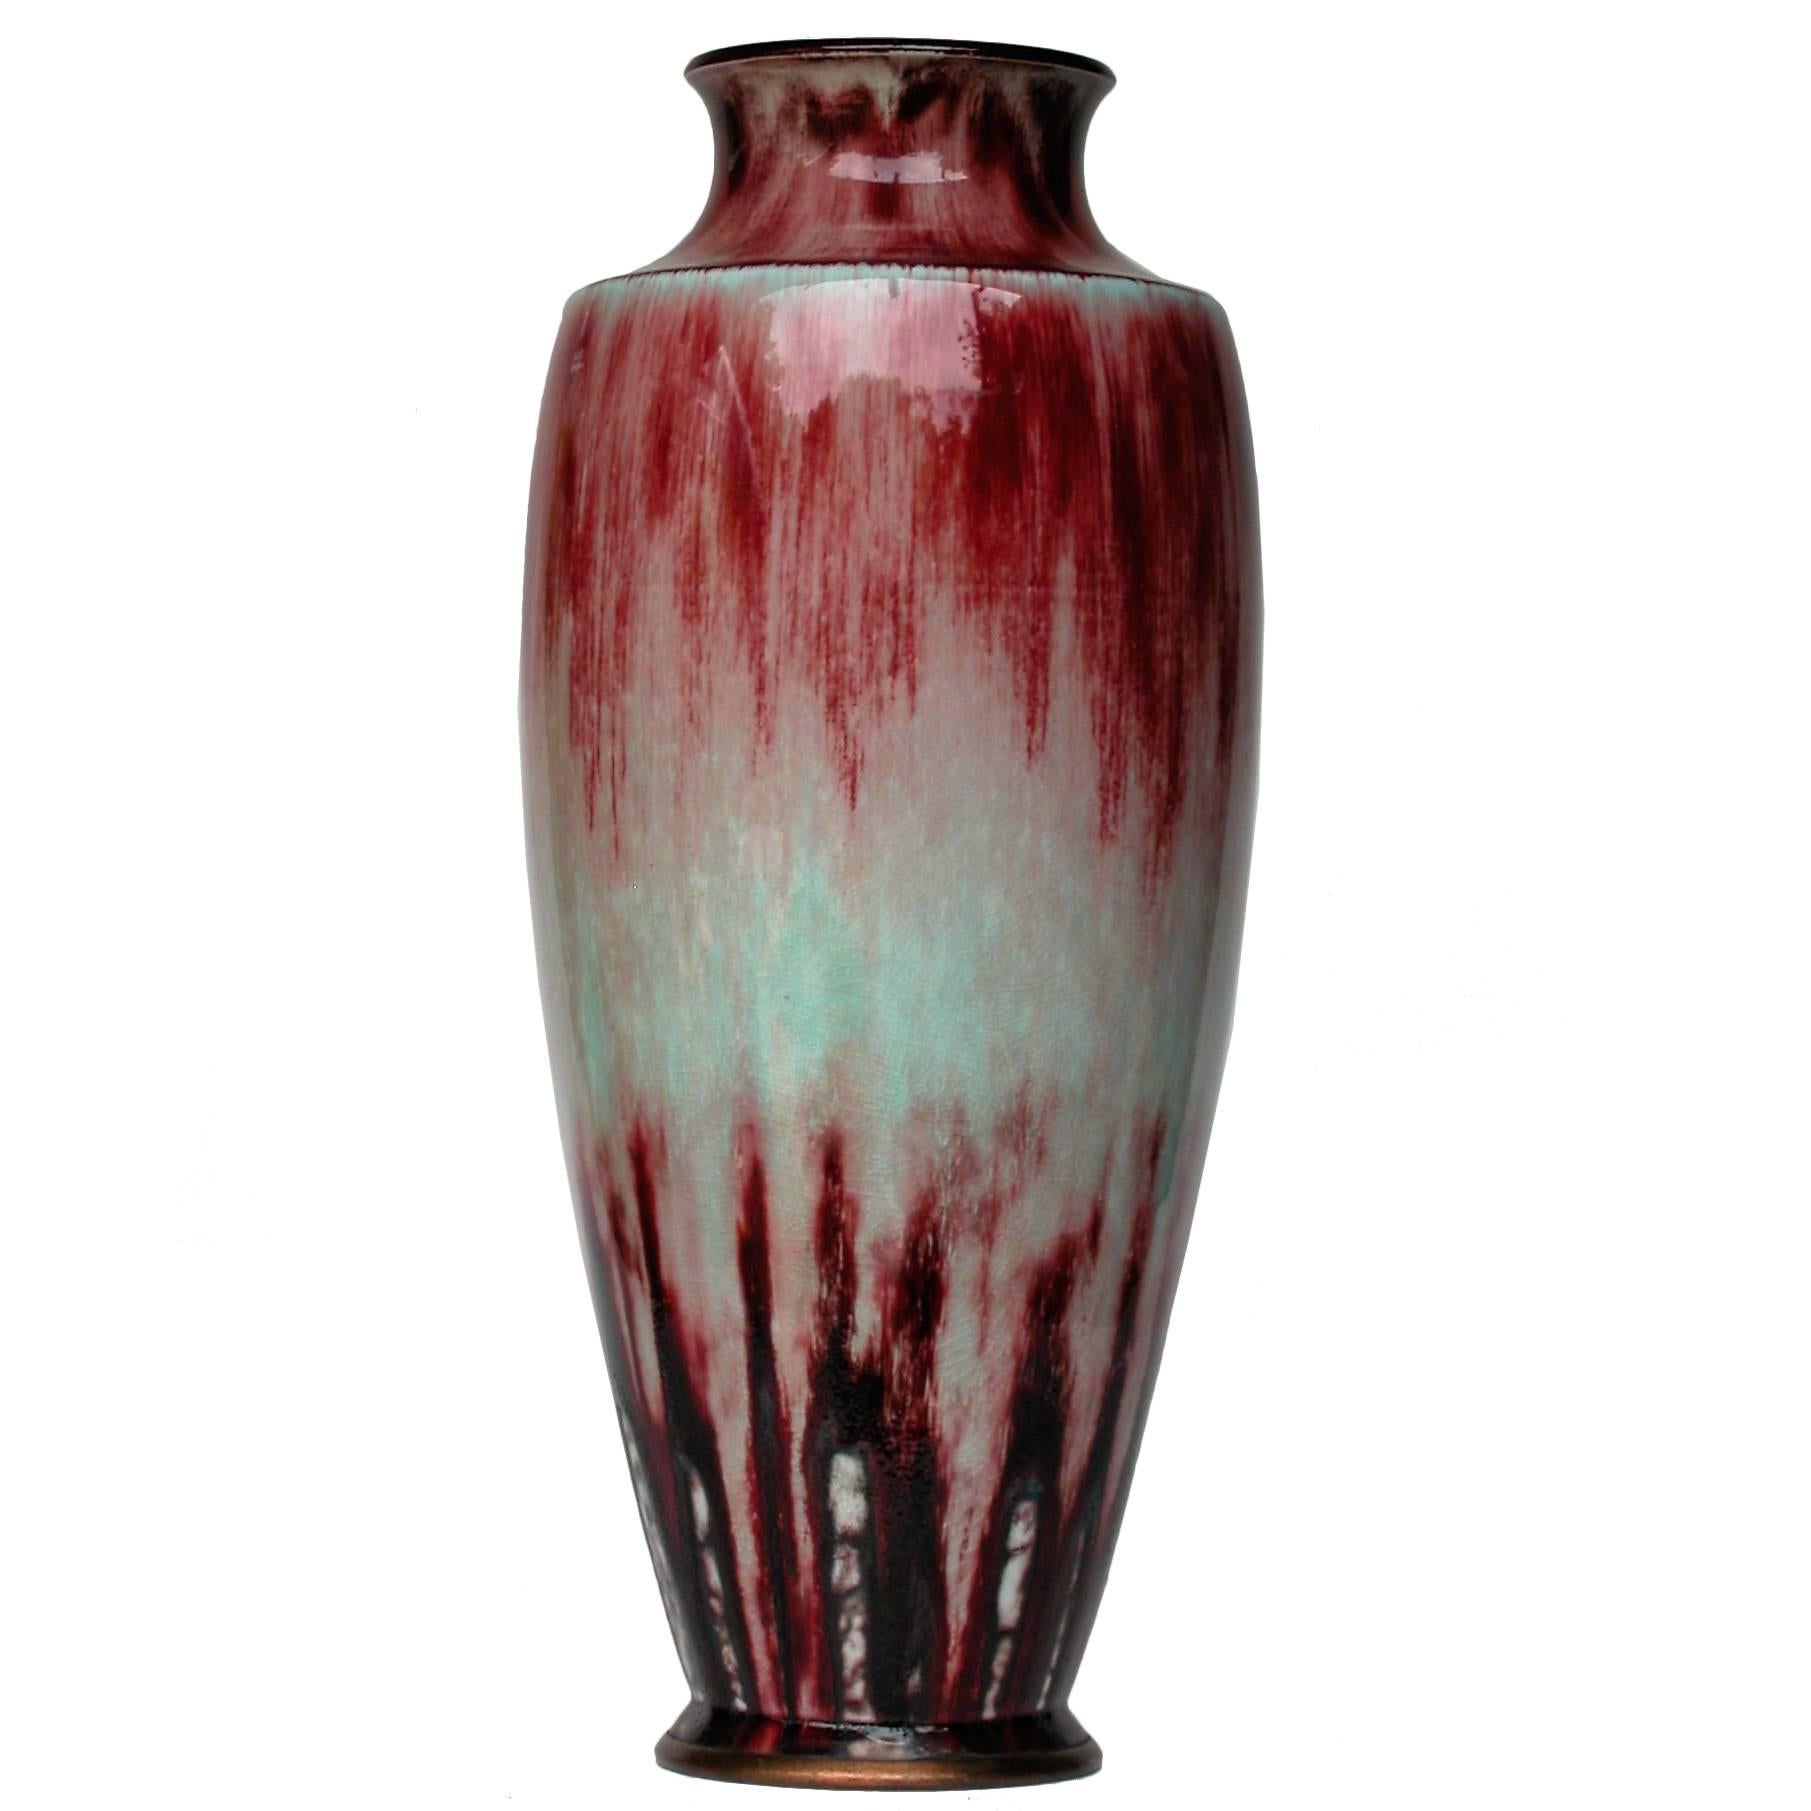 "Big sang de boef" Sèvres Porcelain Vase For Sale